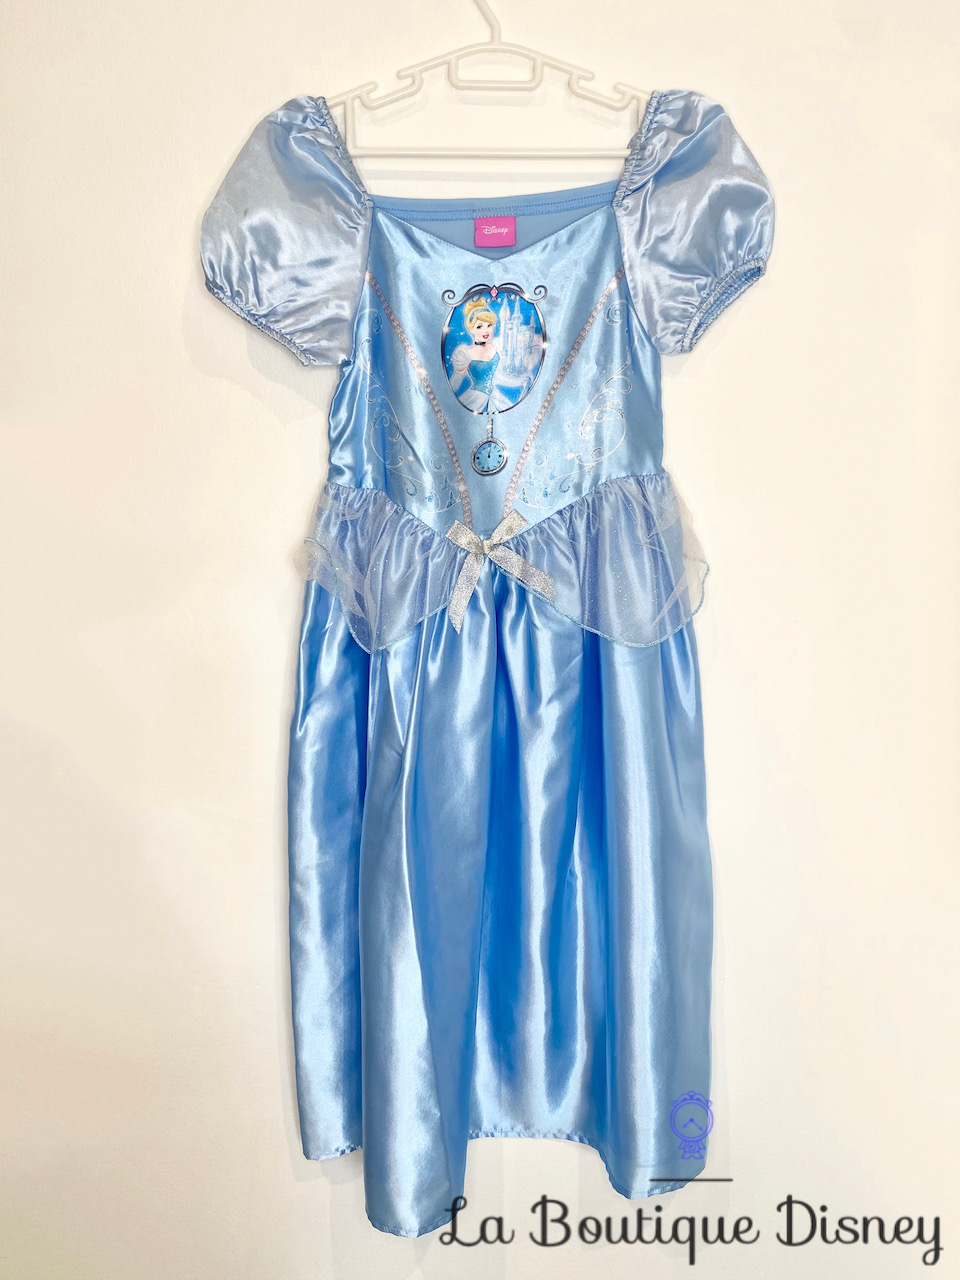 Déguisement Cendrillon Disney Rubies Costume taille 5-6 ans robe princesse bleu